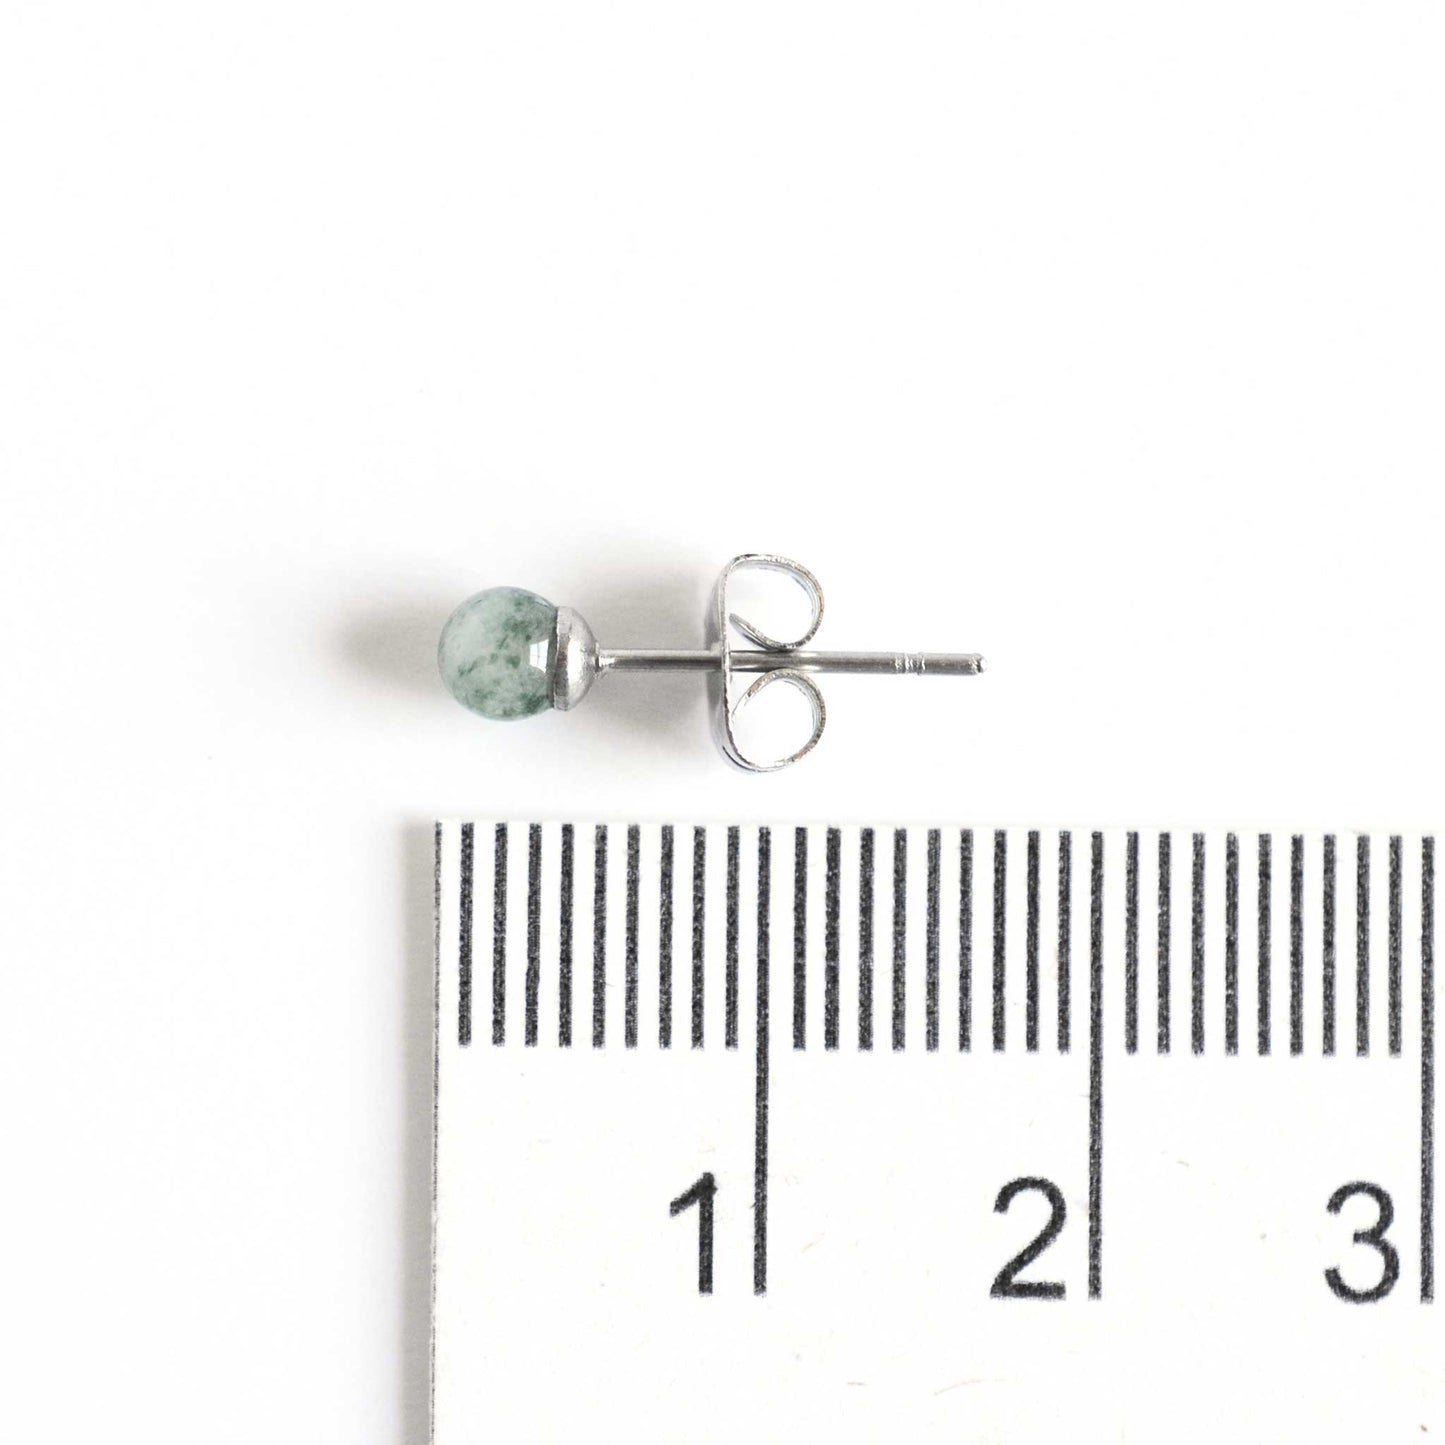 4mm Green Aventurine single stud earring next to ruler